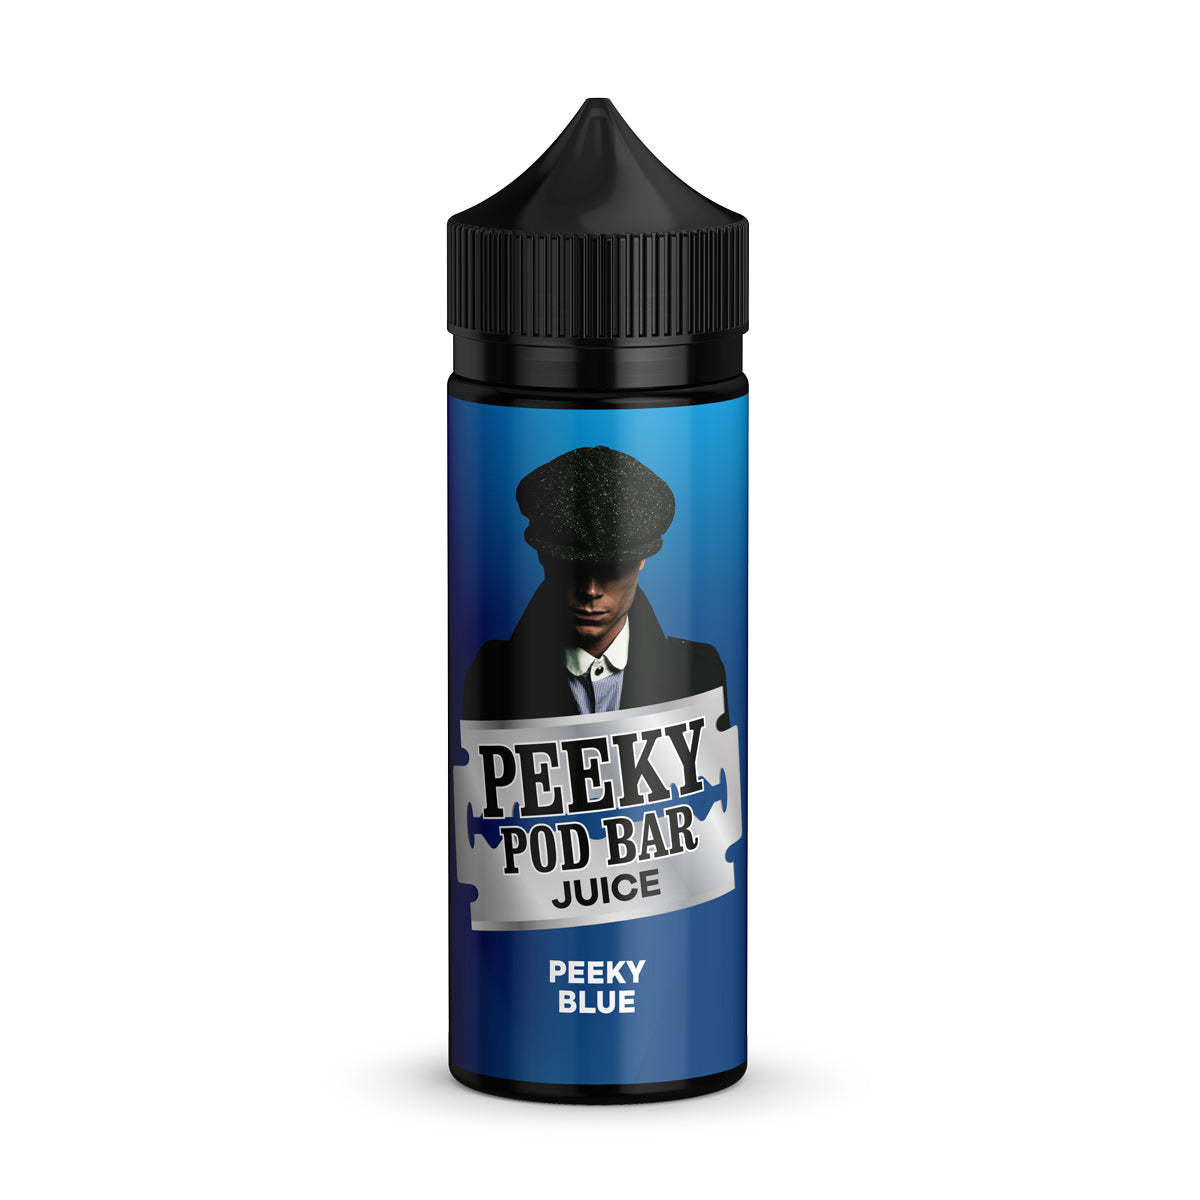 Peeky Blue by Peeky Pod Bar 120ML